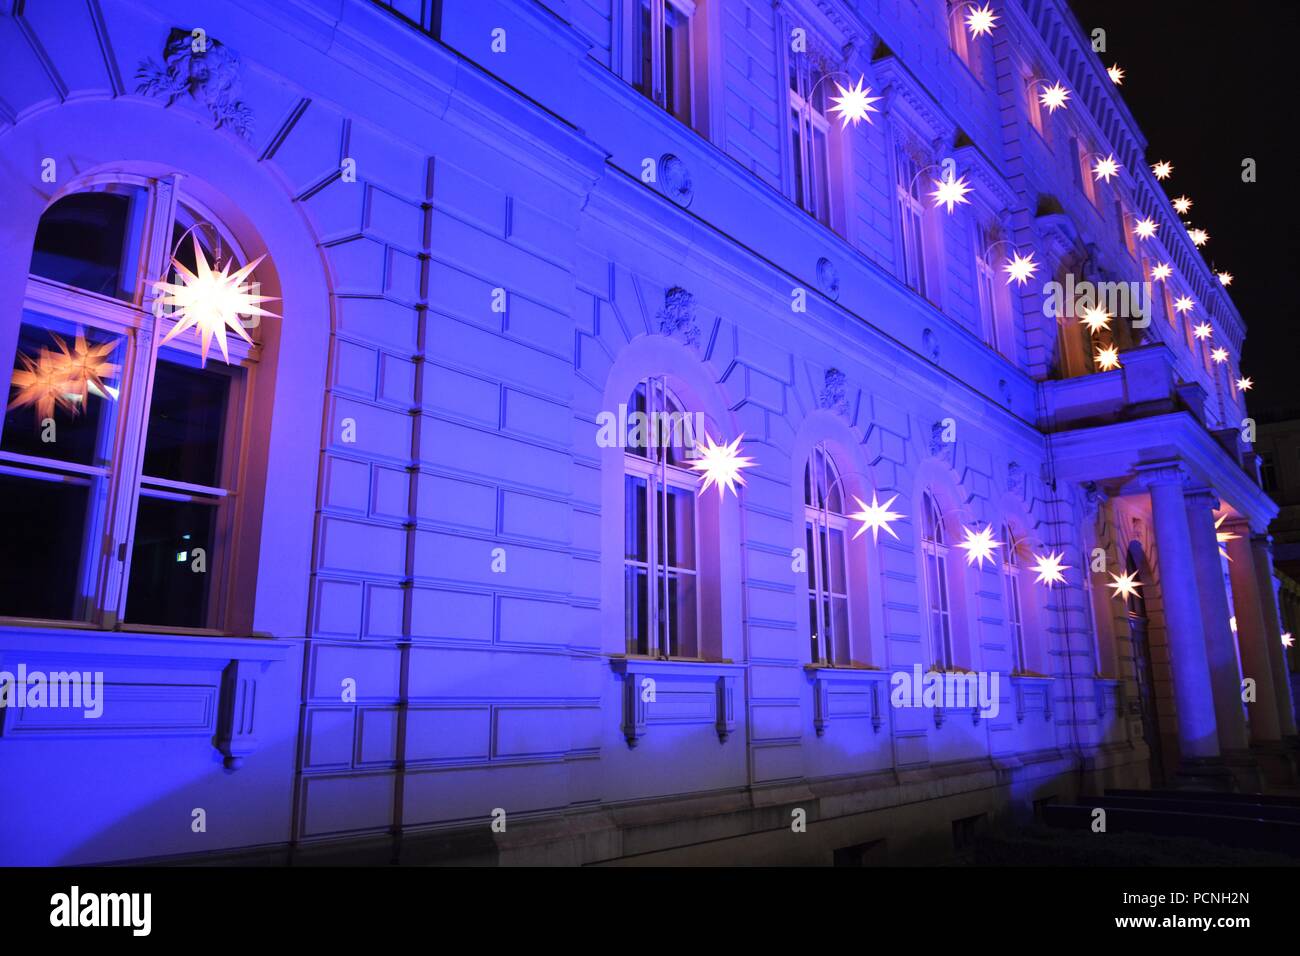 Alte Kommandantur building illuminated at night Stock Photo - Alamy